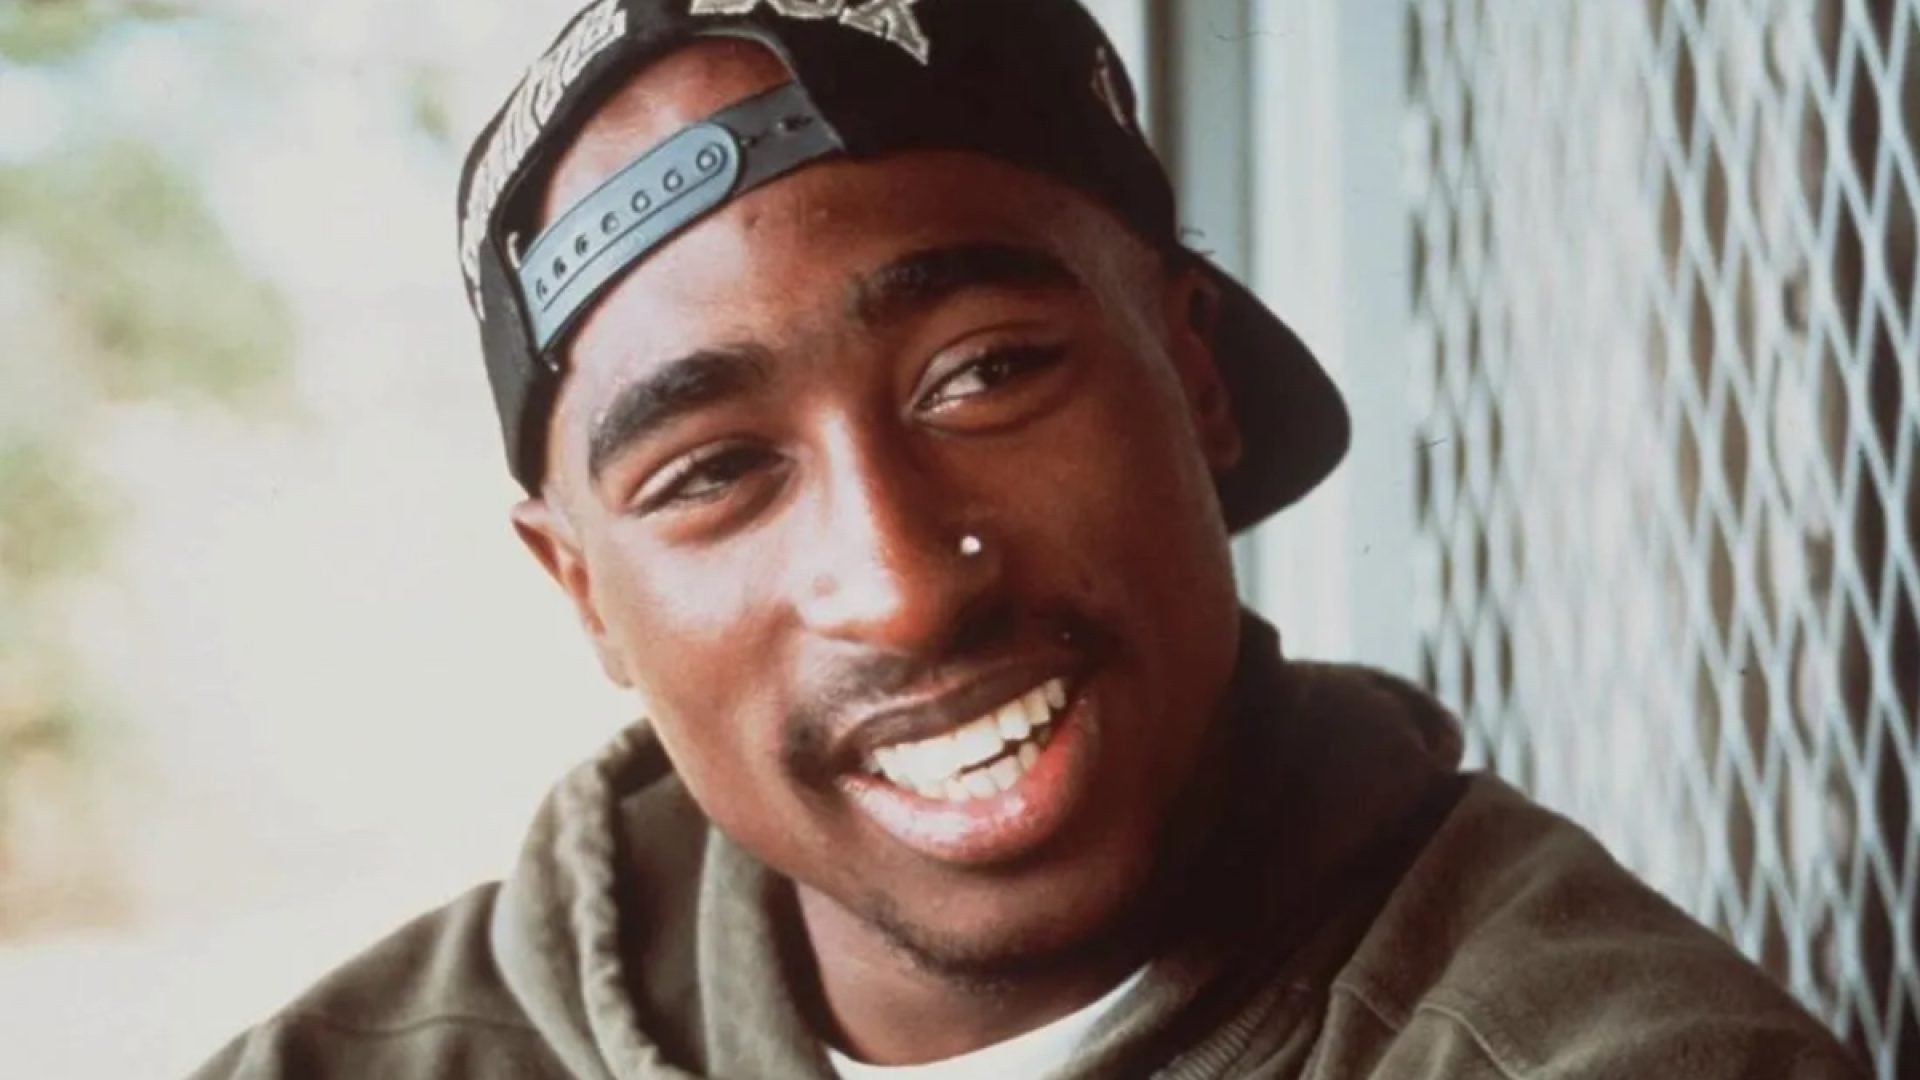 Remember Me: Tupac Shakur’s Biggest Moments